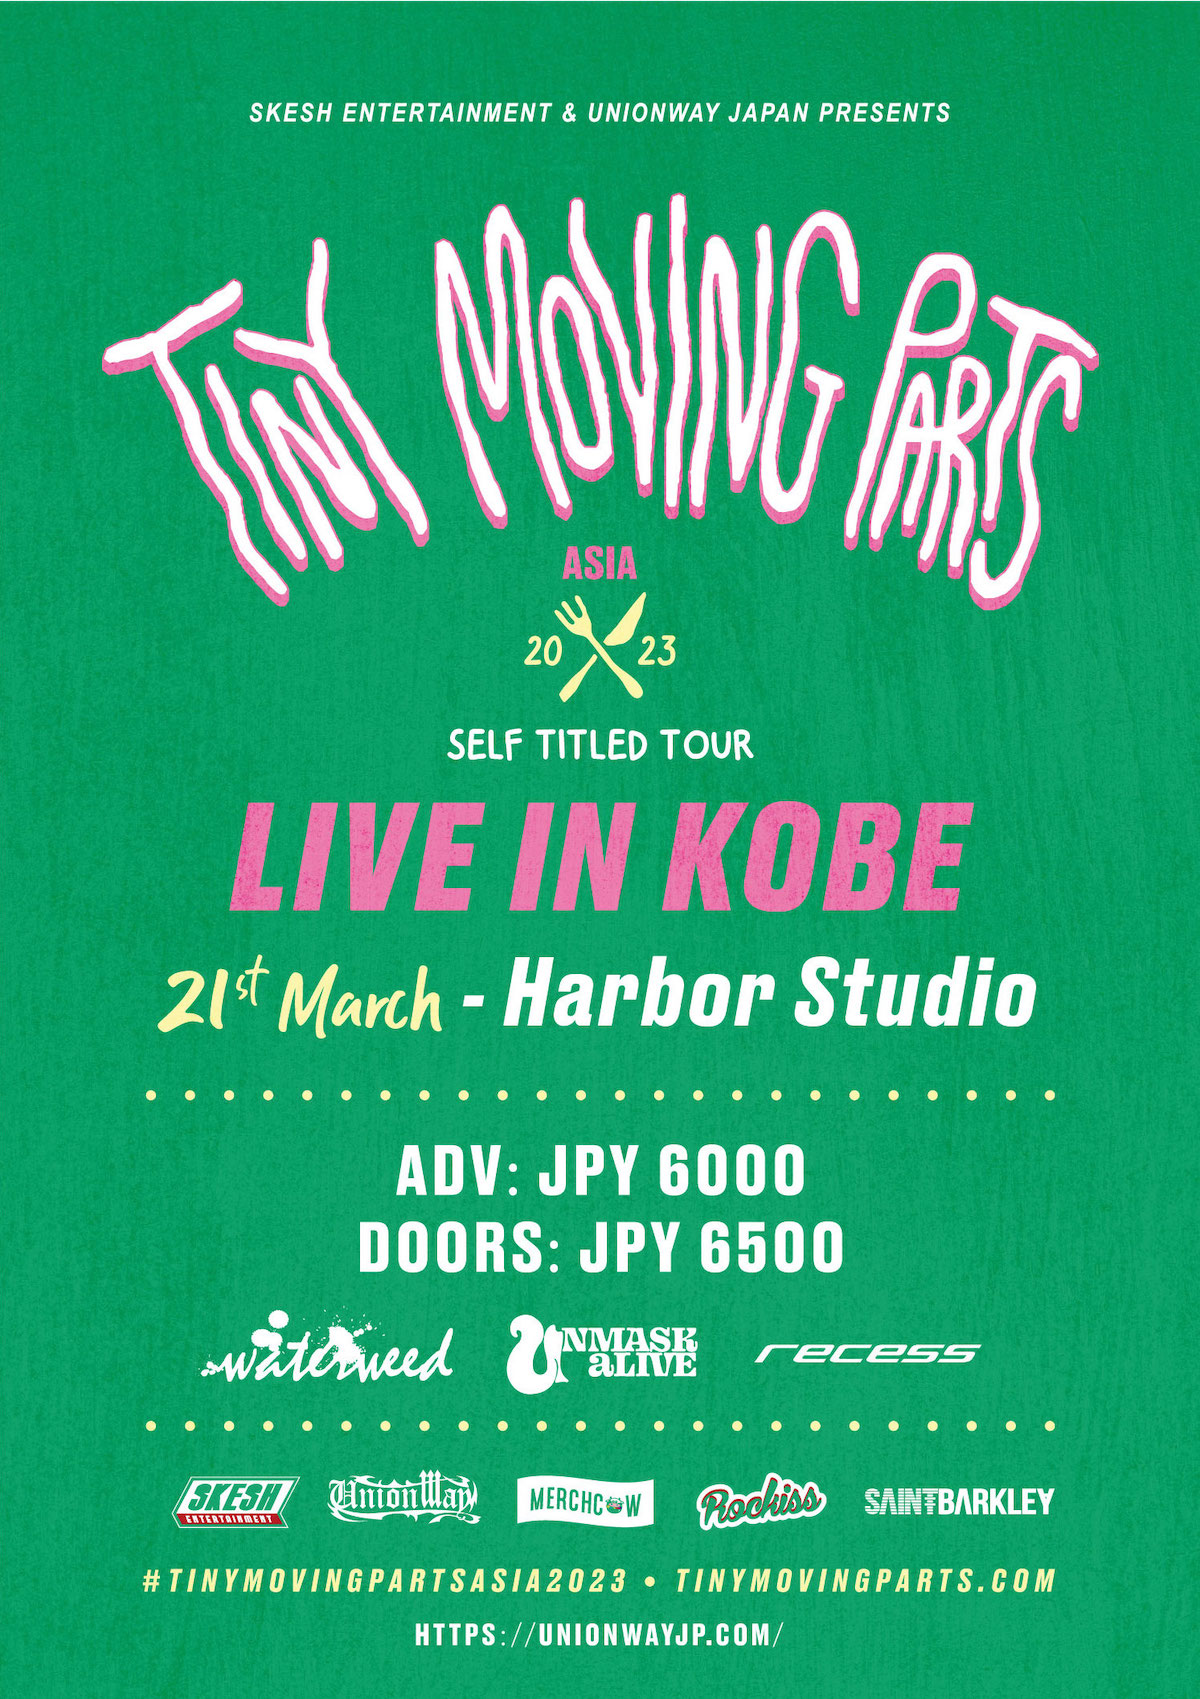 3.21 TINY MOVING PARTS 「SELF TITLED ASIA TOUR 2023」神戸Harbor Studioの写真